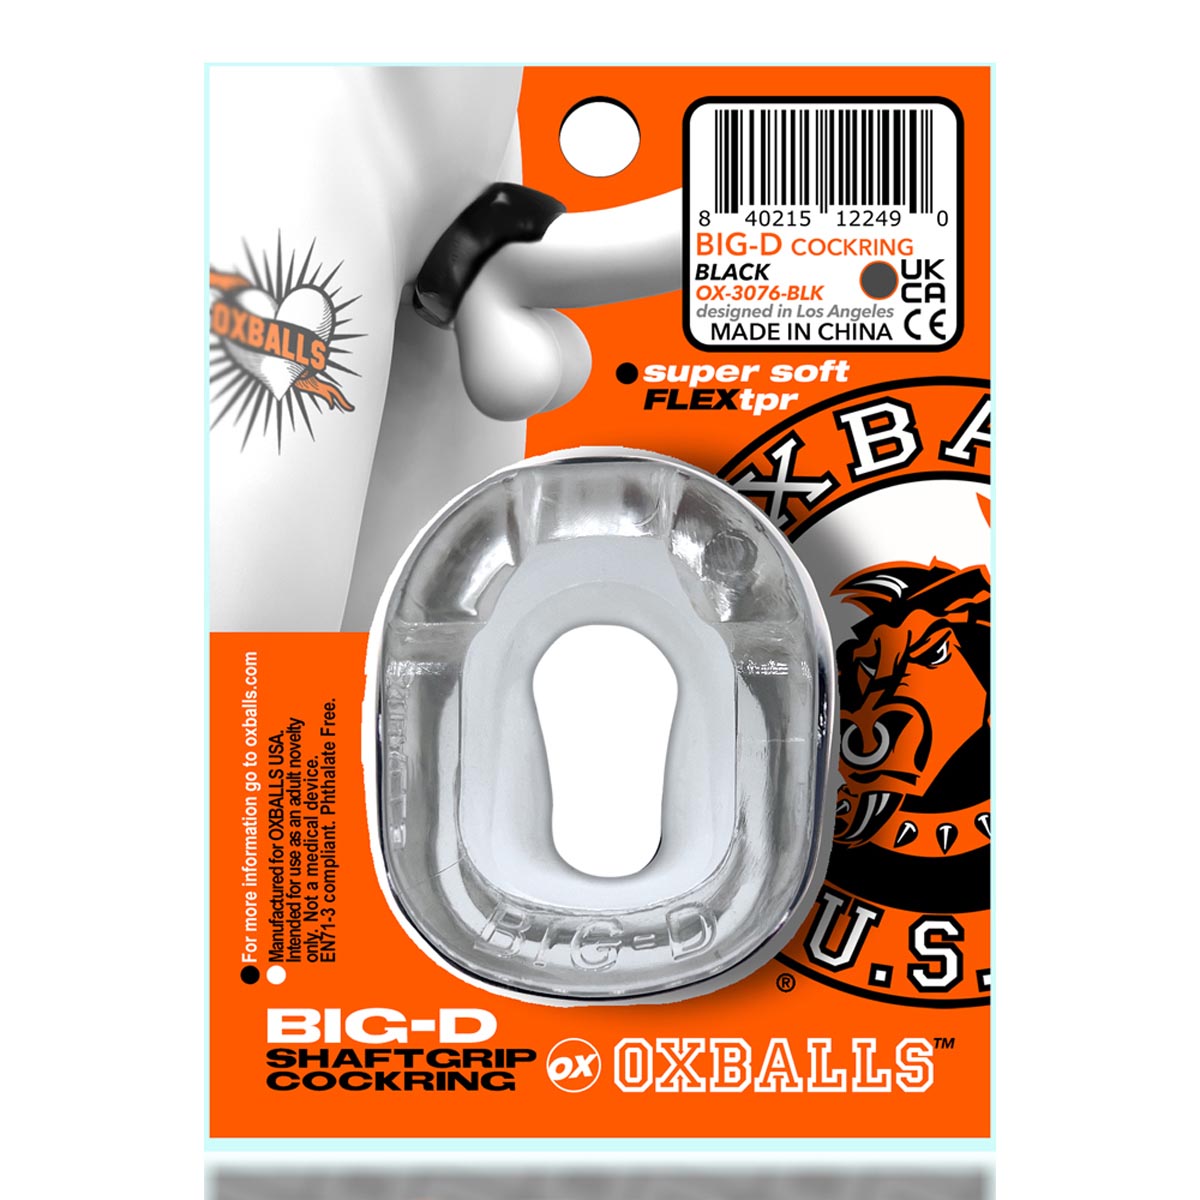 Oxballs - Big-D Shaft Grip Cockring – Clear